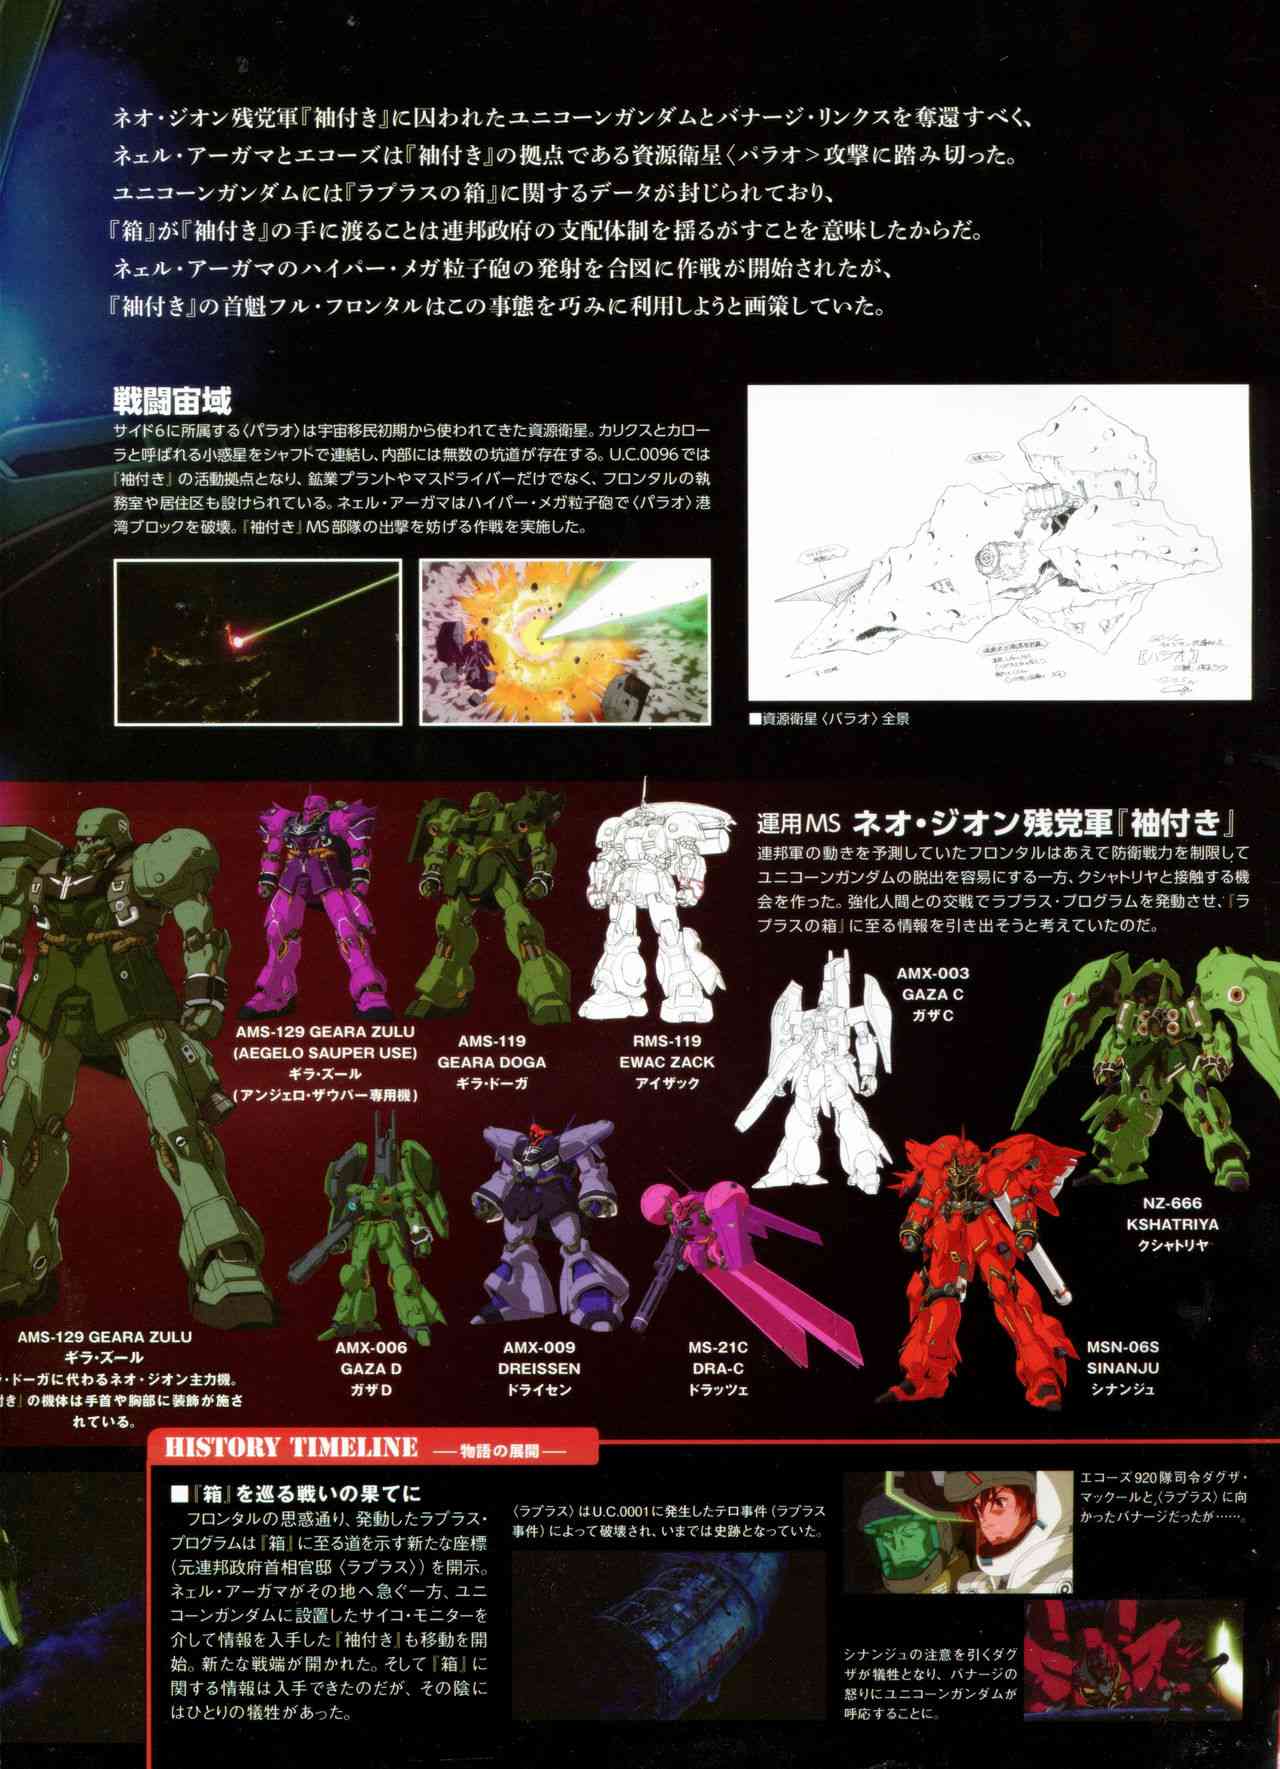 Gundam Mobile Suit Bible - 8卷 - 6